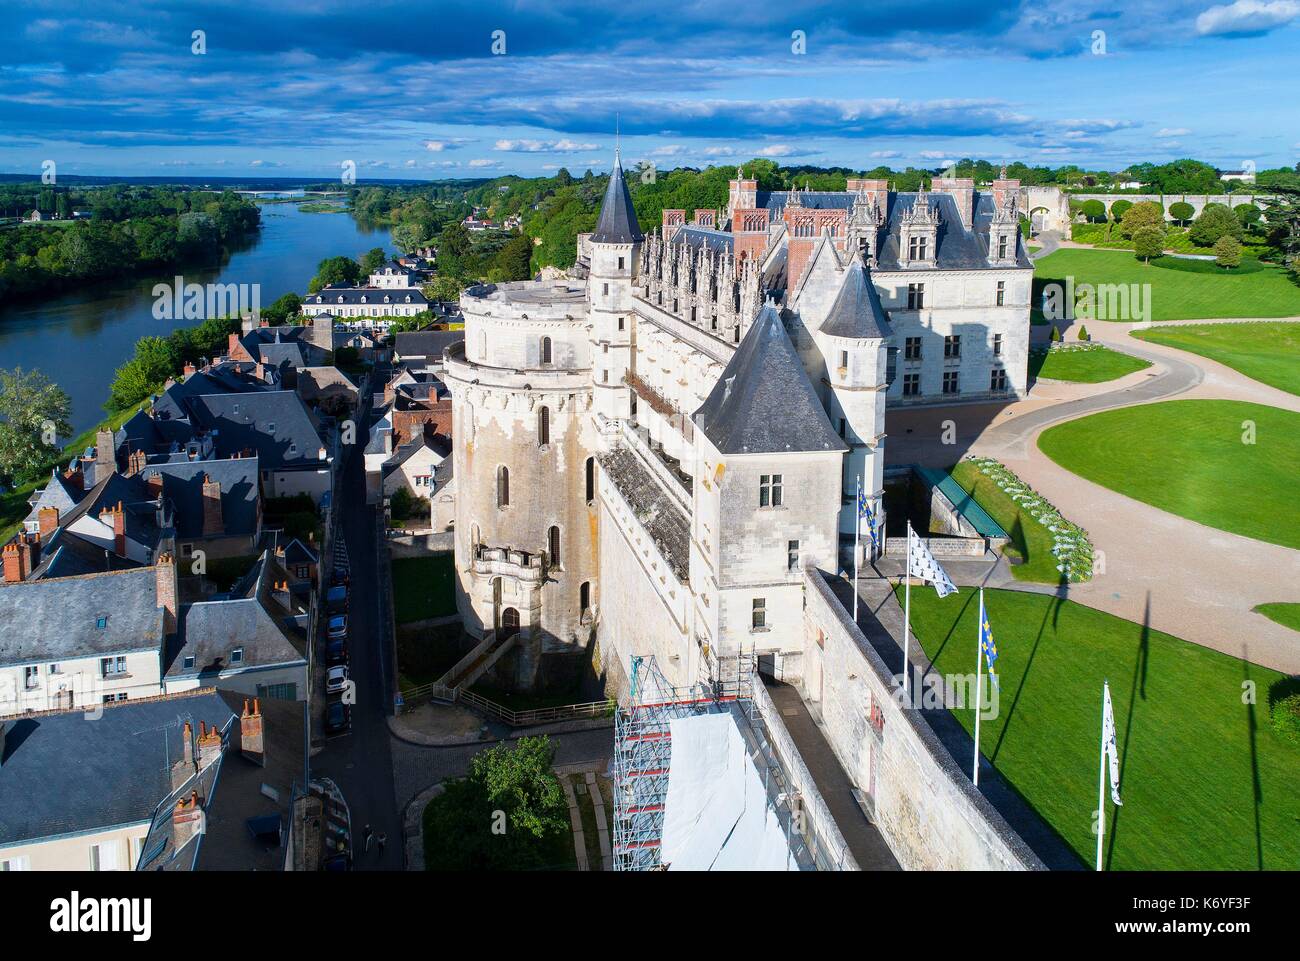 Francia, Indre et Loire, Valle del Loira catalogado como Patrimonio Mundial por la UNESCO, Amboise, el castillo medieval del siglo XV (vista aérea) Foto de stock